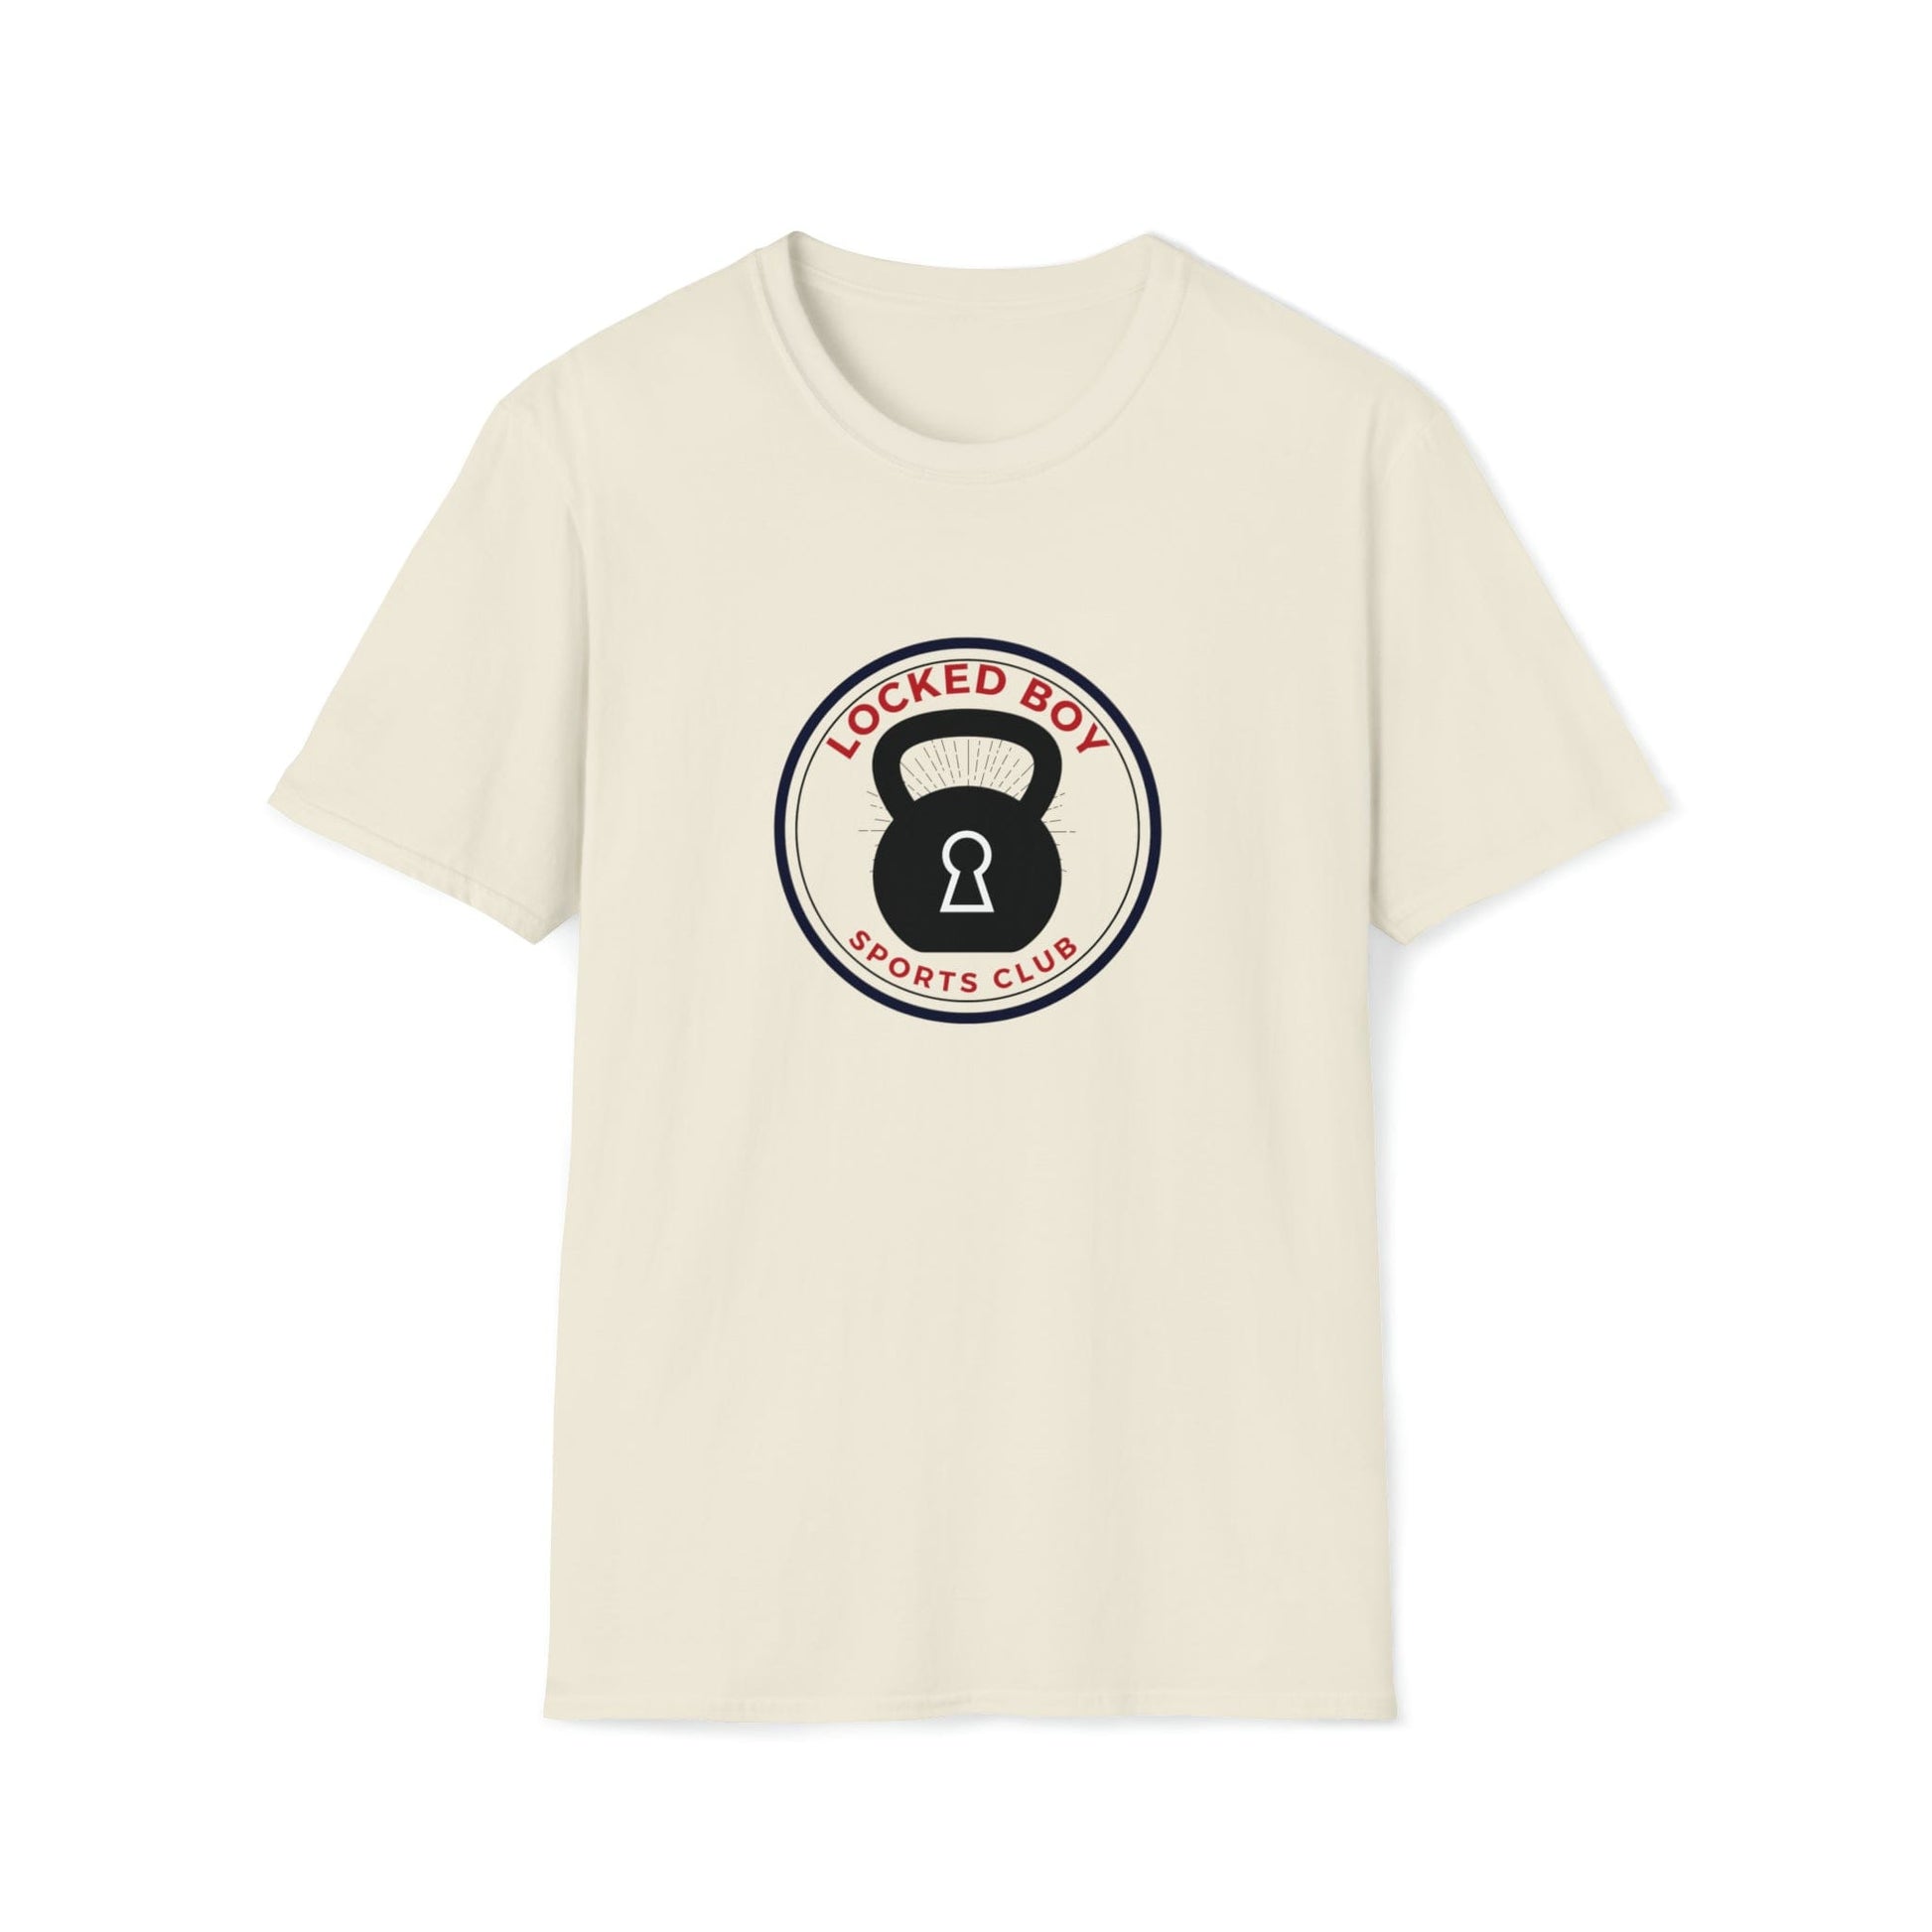 T-Shirt Natural / S LockedBoy Sports Club - Chastity Tshirt Kettlebell LEATHERDADDY BATOR